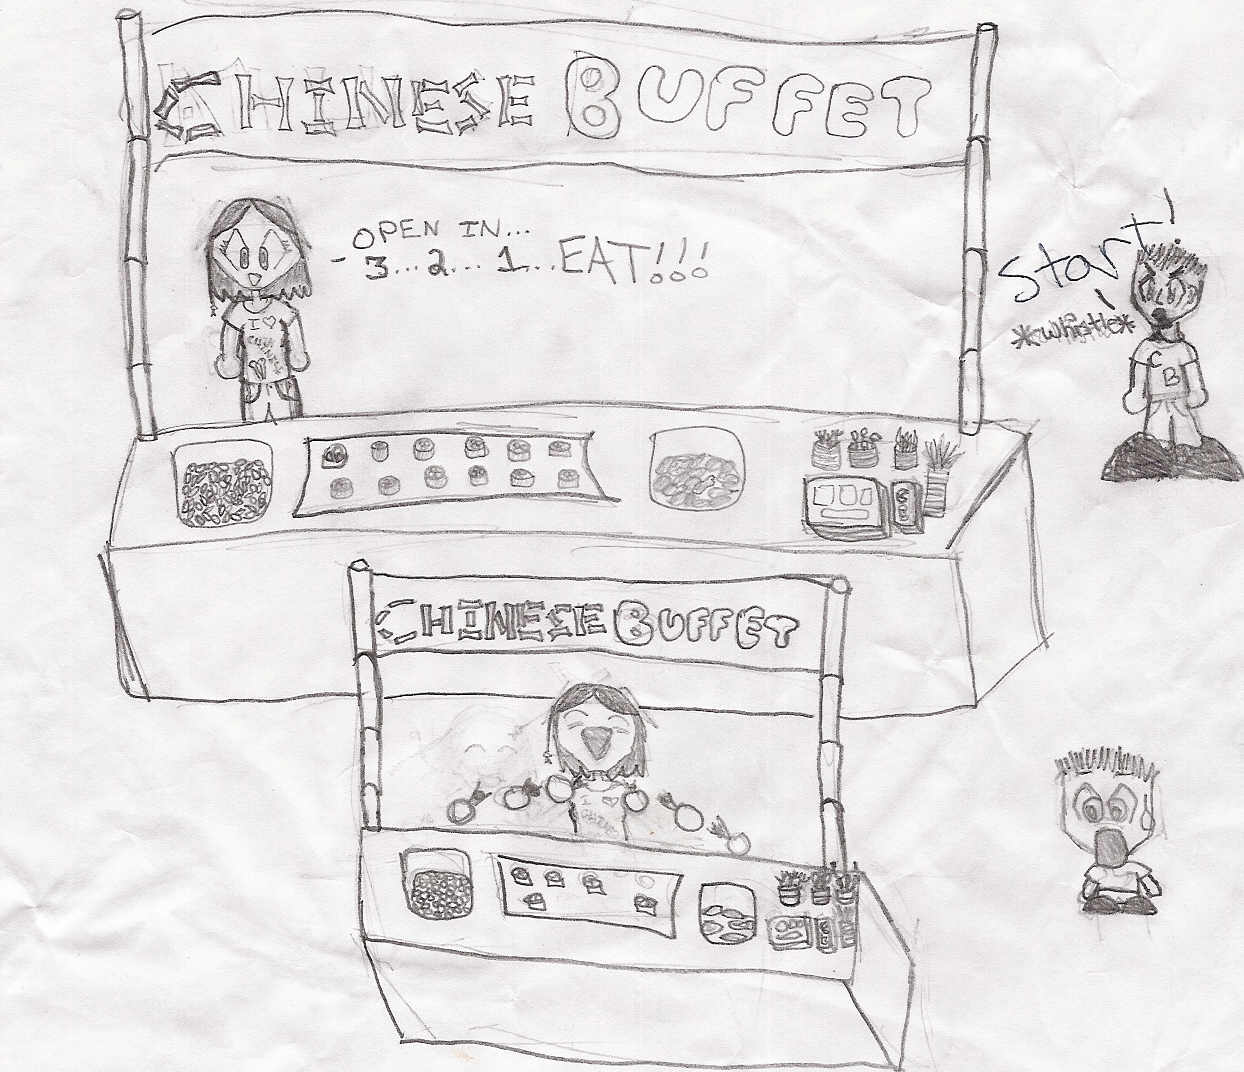 Chinese Buffet by KupoNut